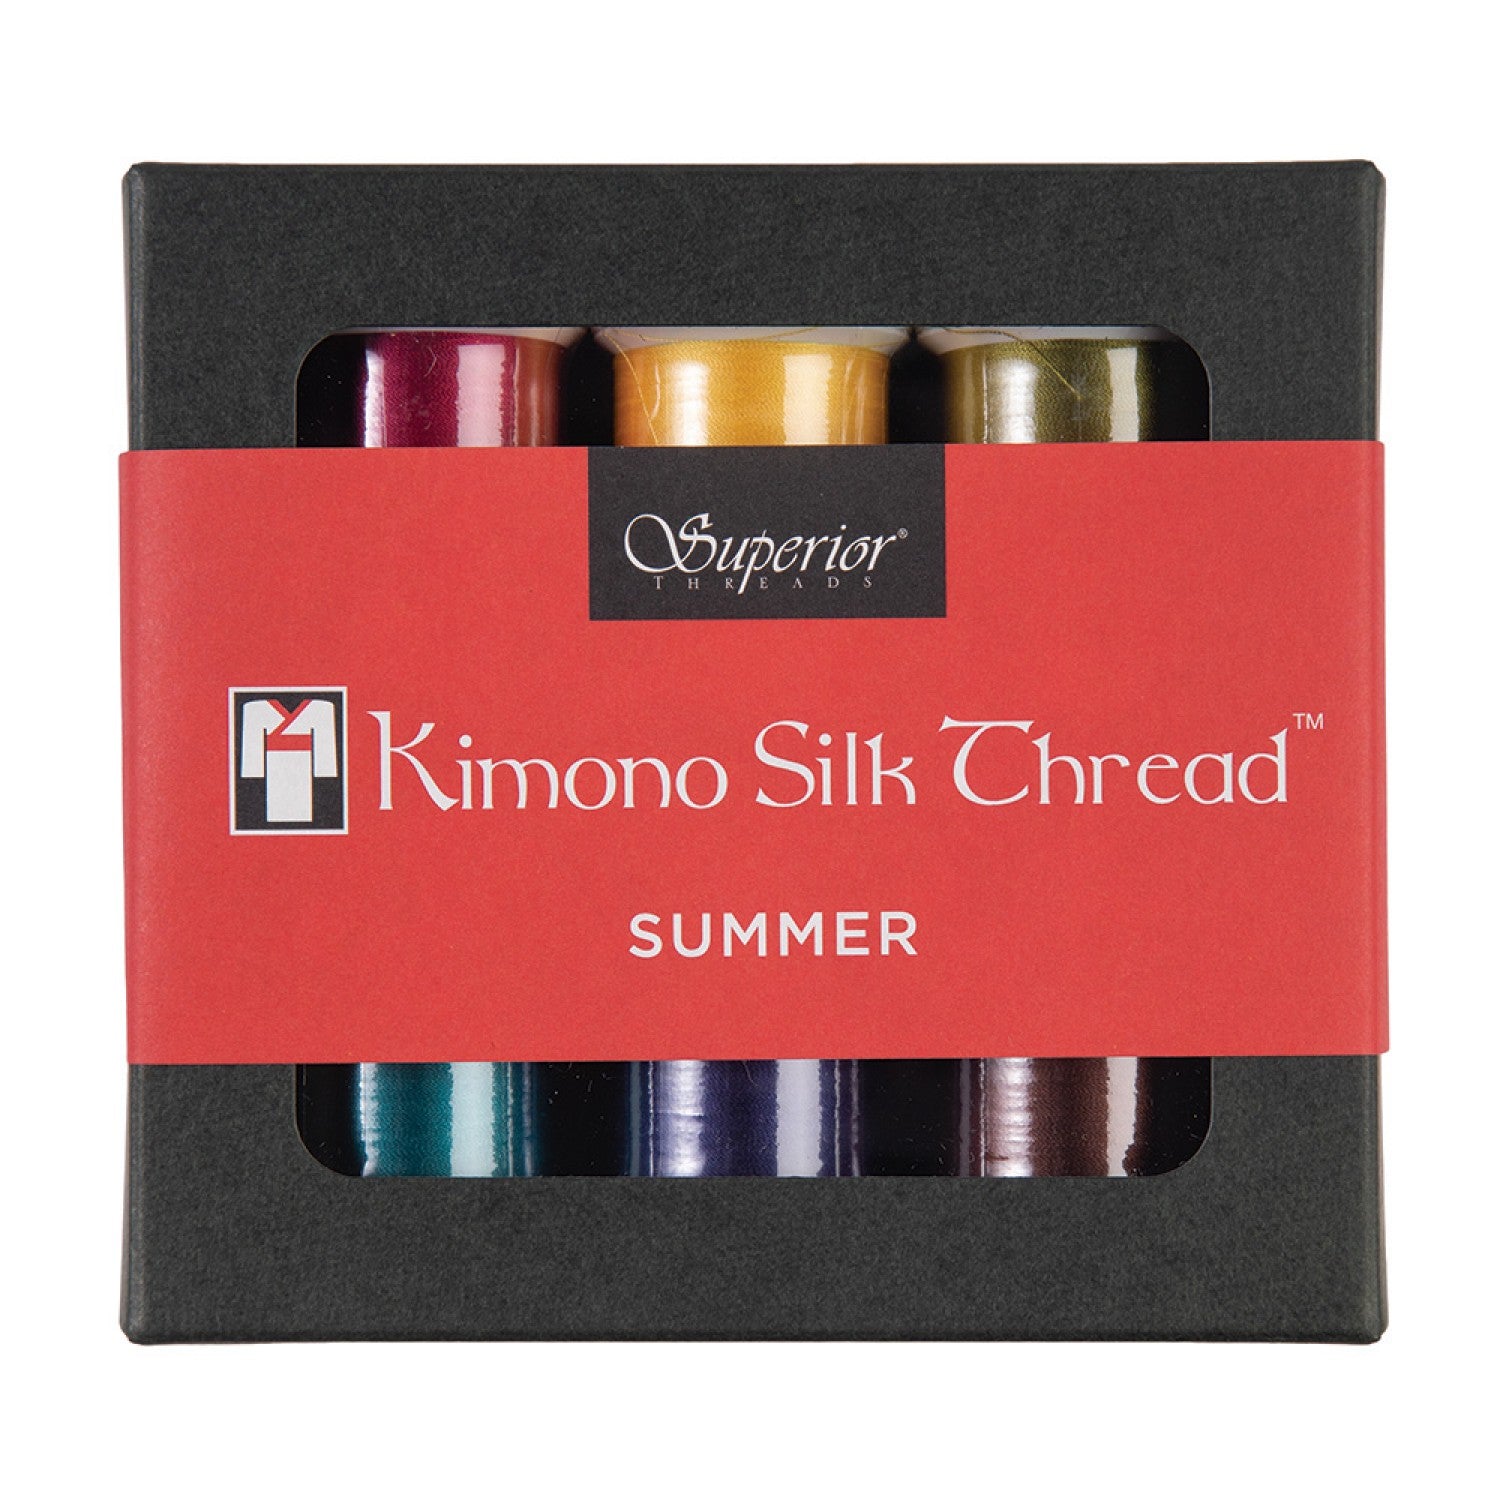 Kimono Silk 6-Spool Thread Set Summer Collection by Superior Threads